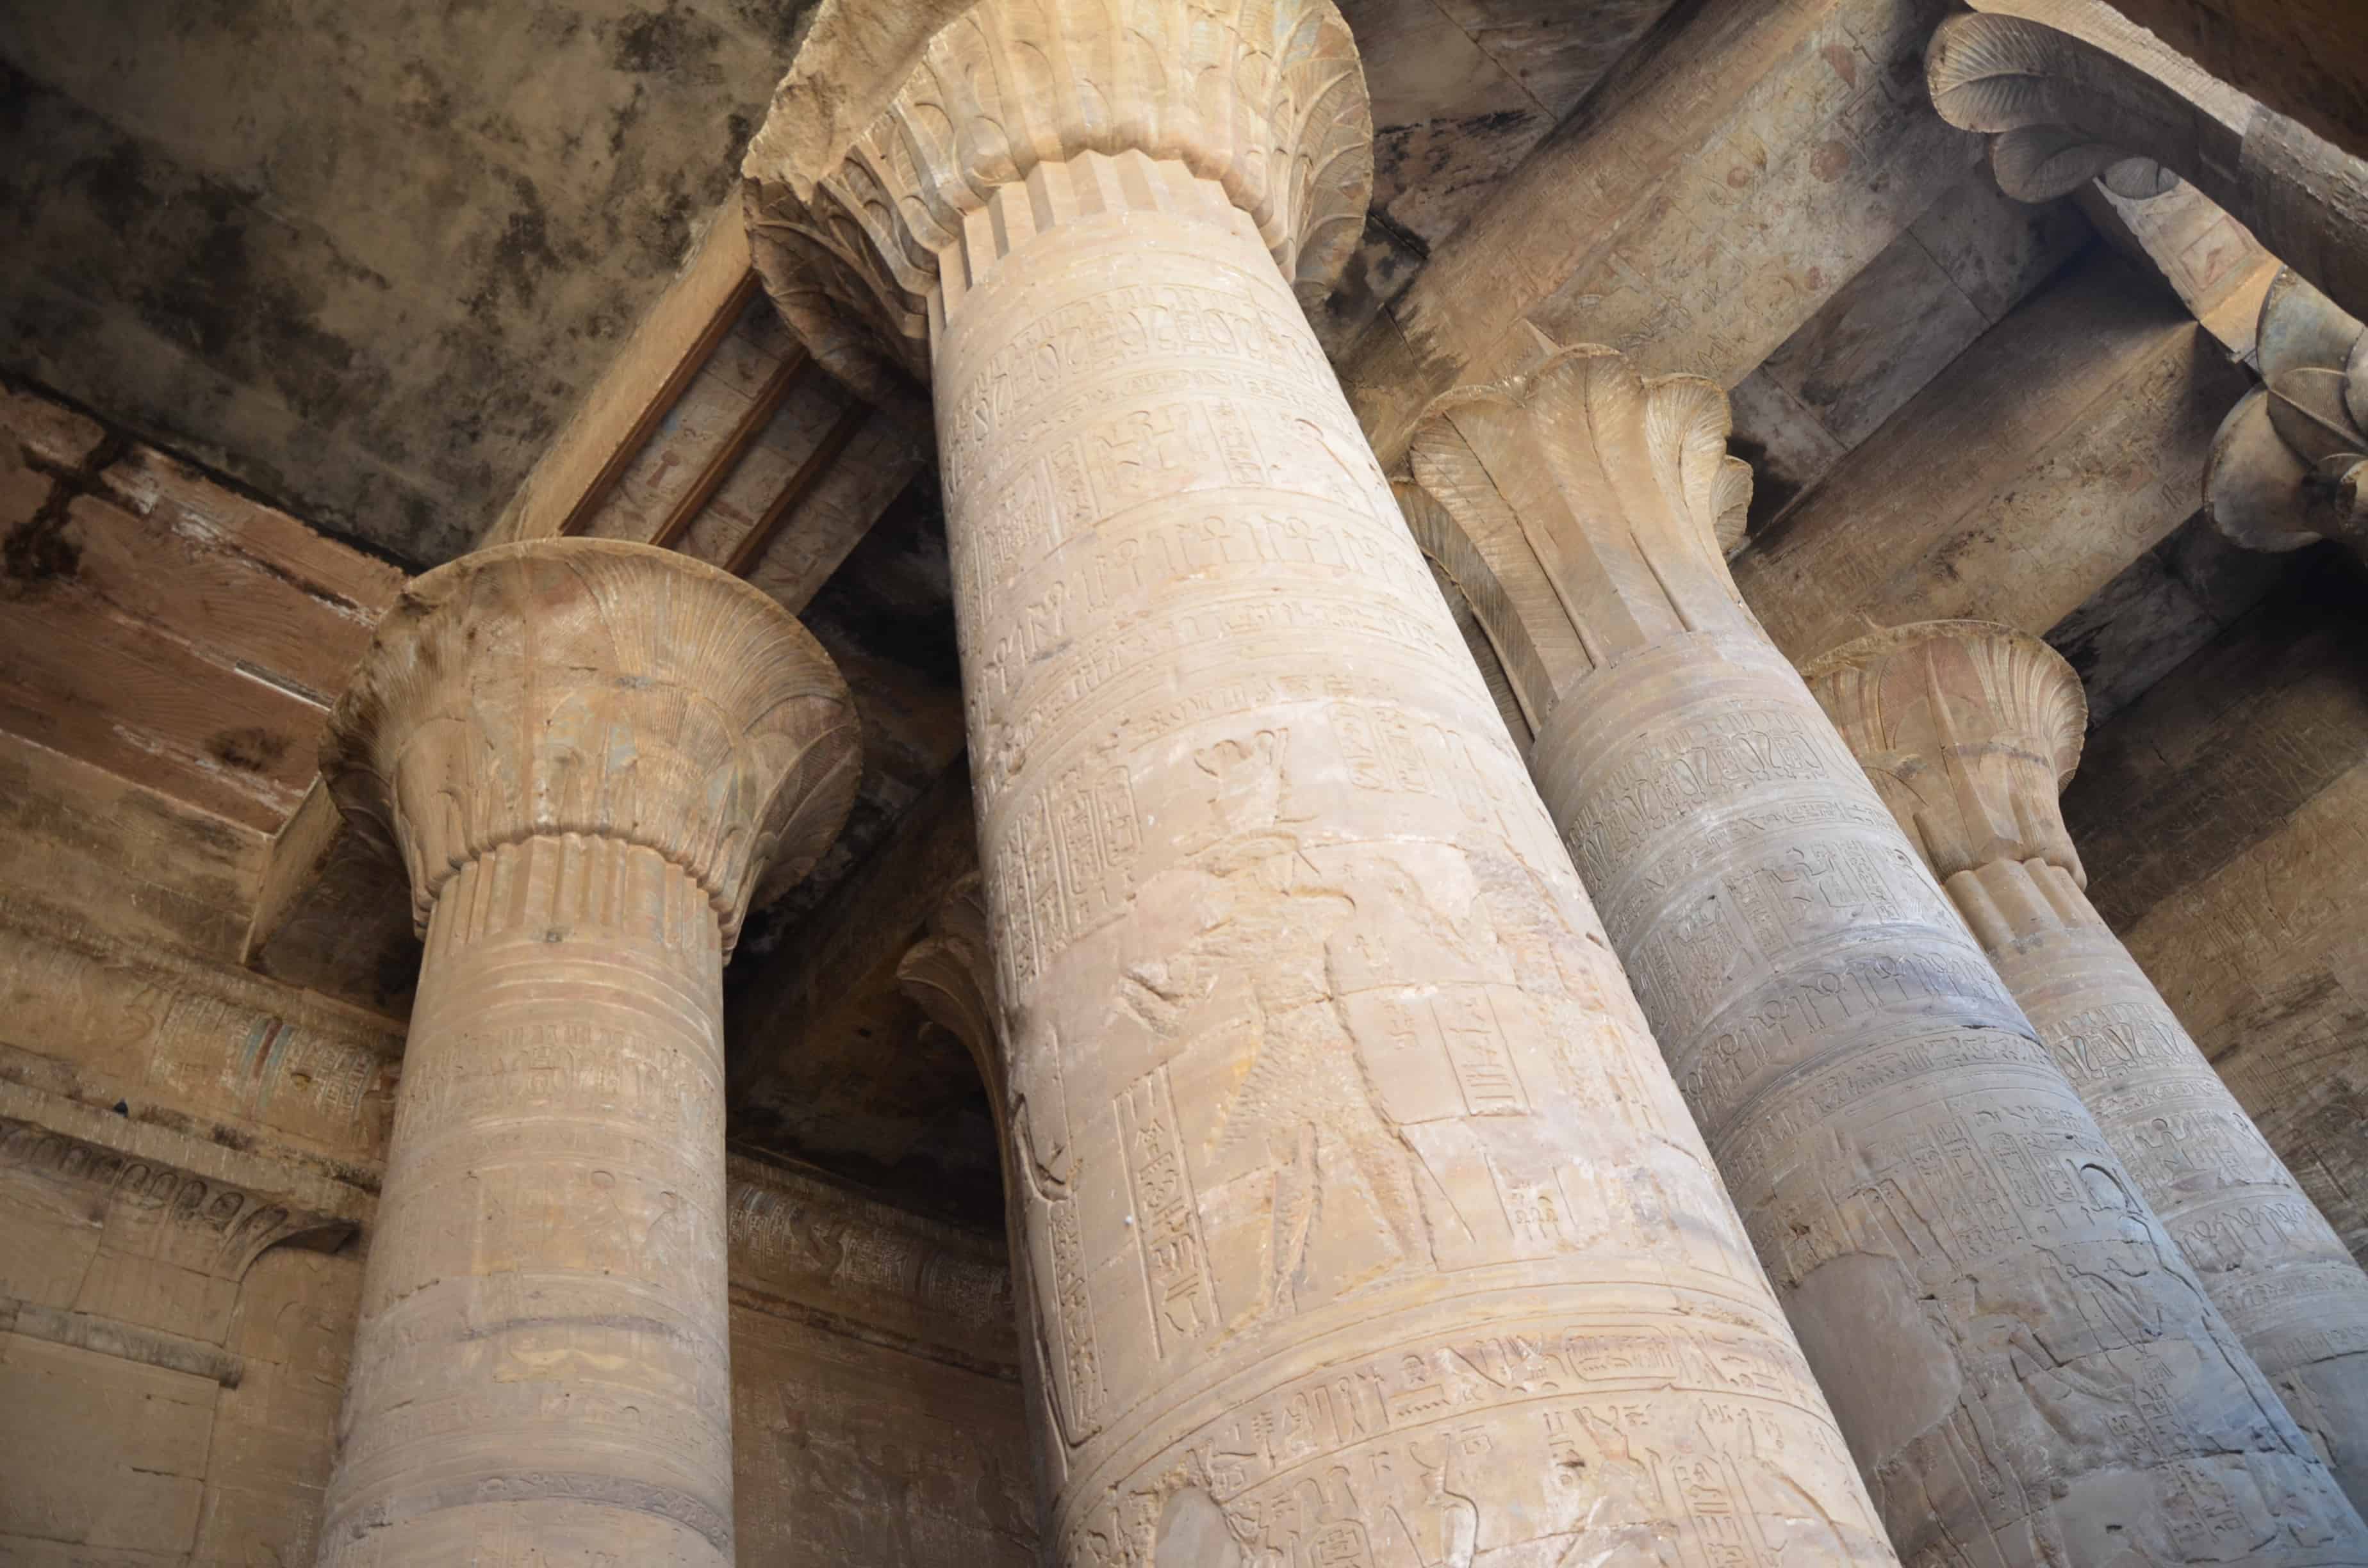 Columns at the Temple of Edfu, Egypt